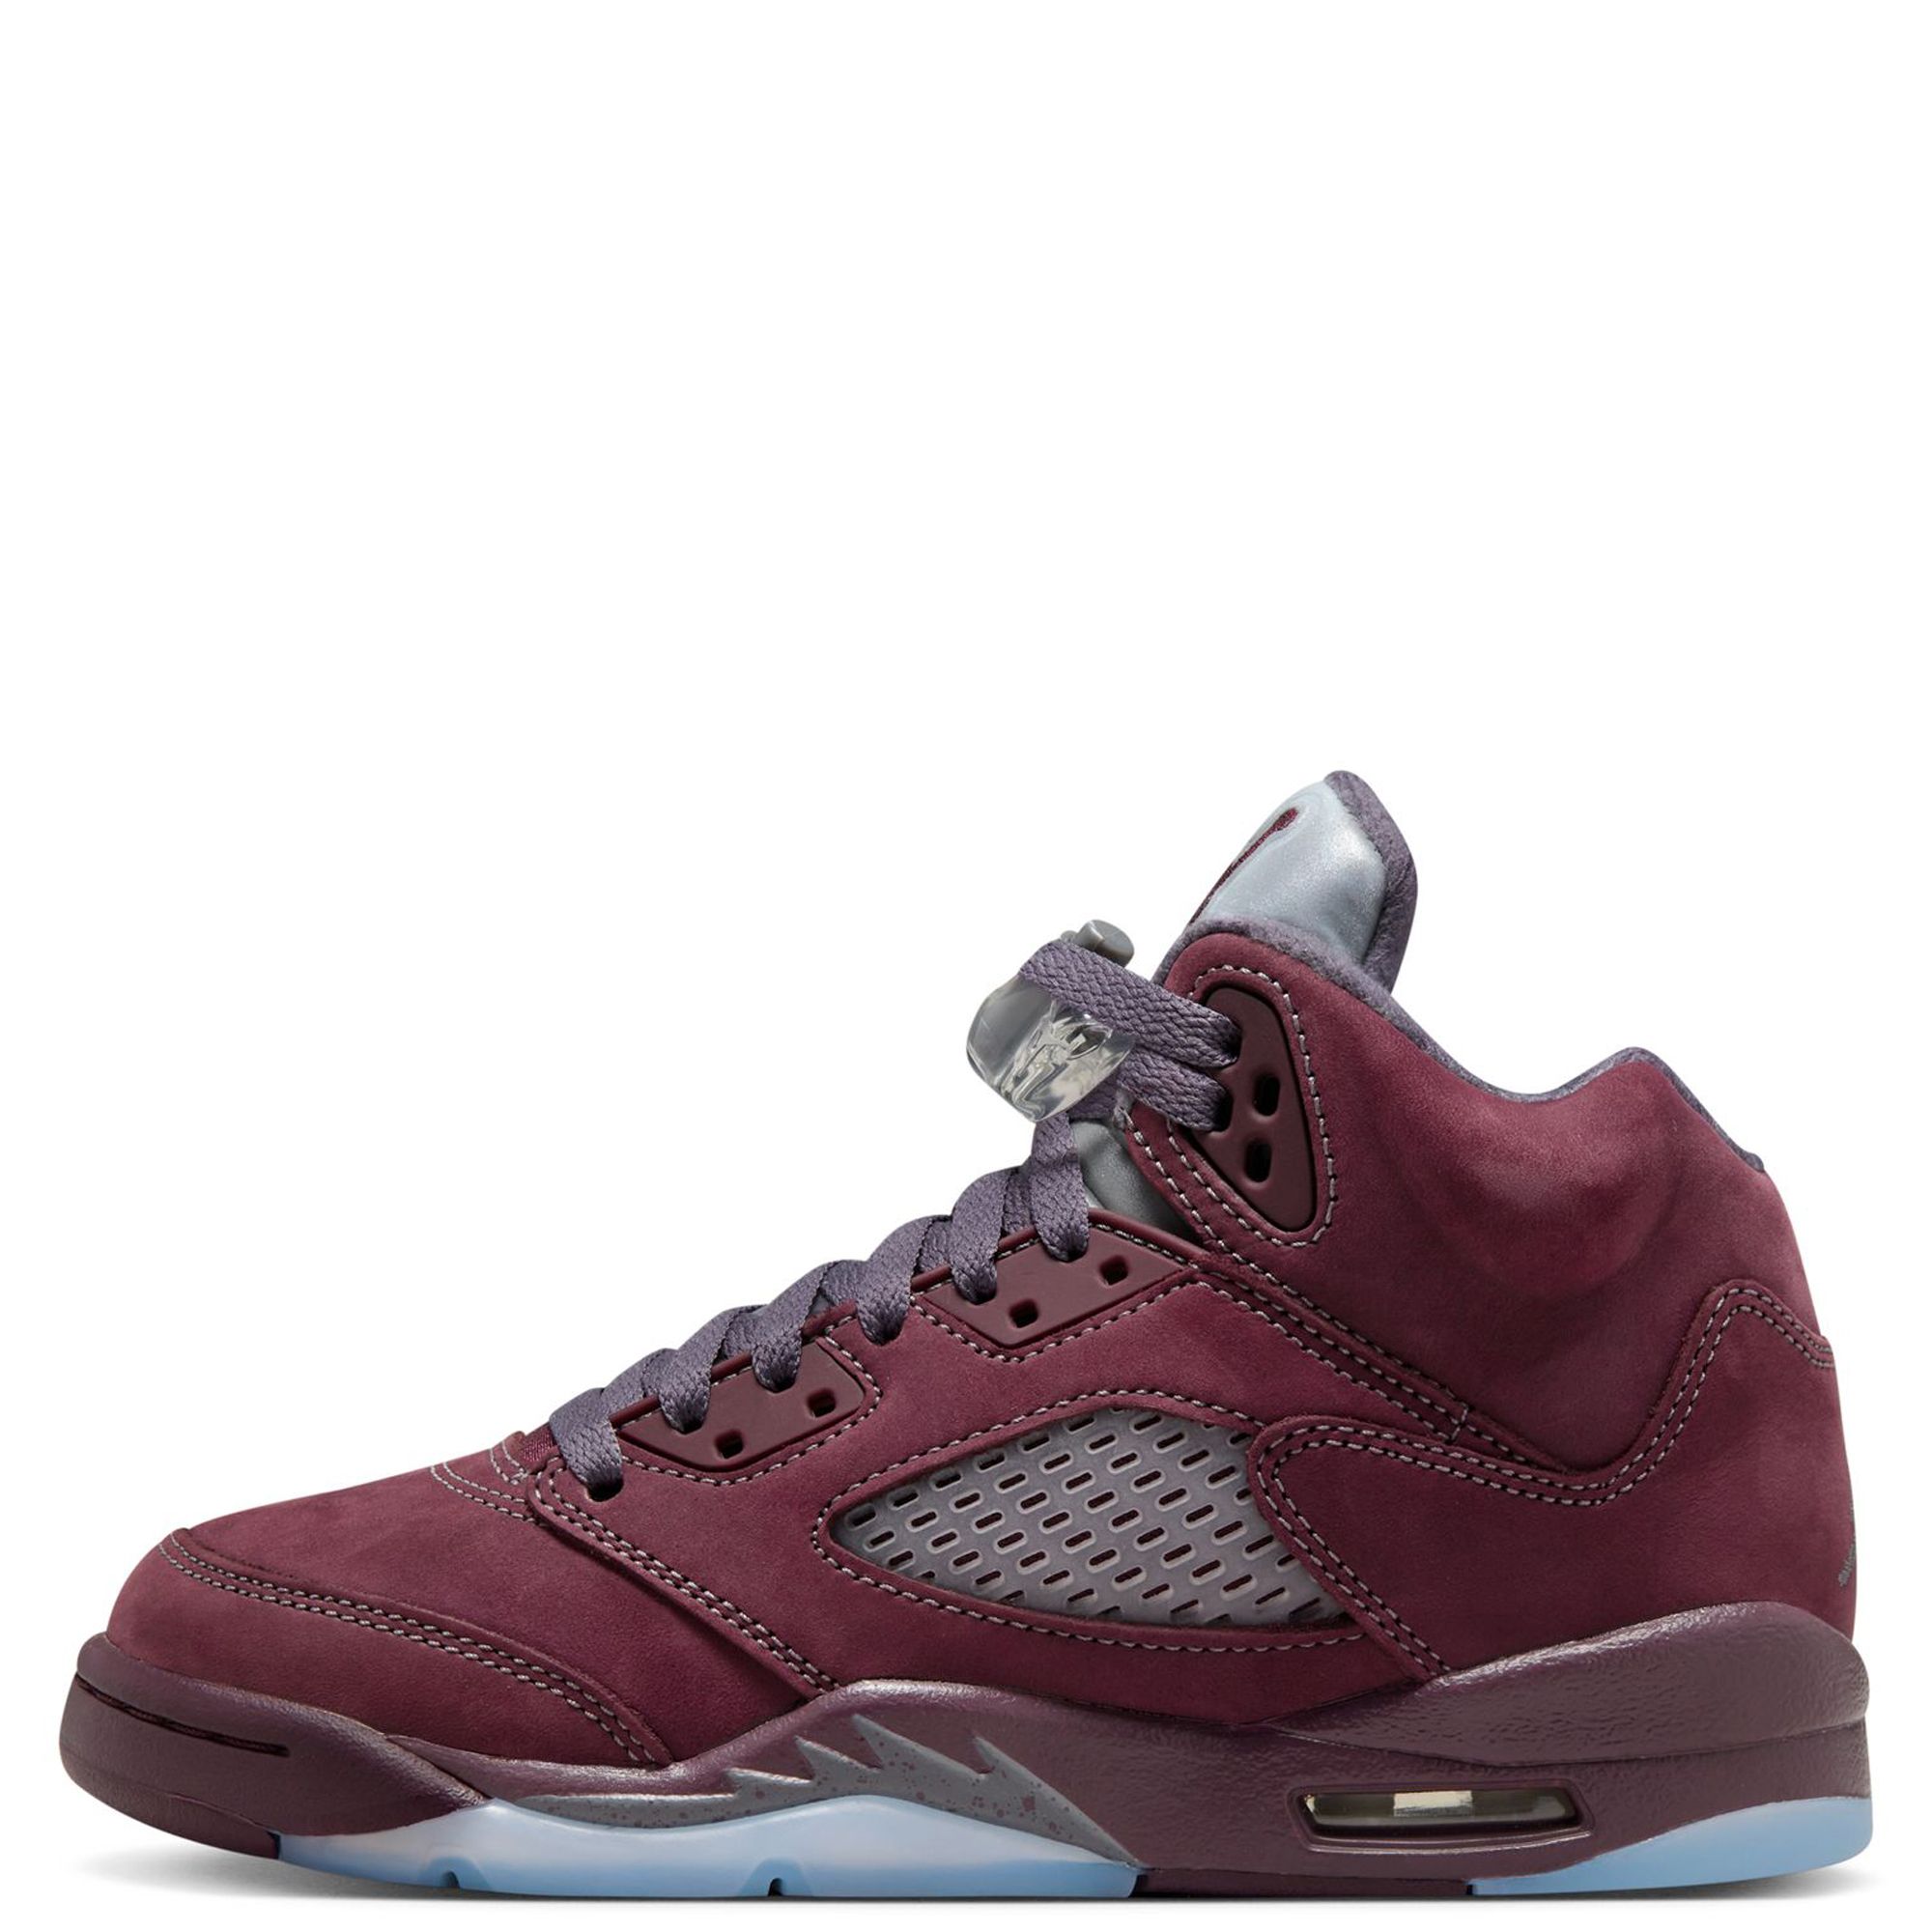 Air Jordan Retro 5 SE Basketball Shoes